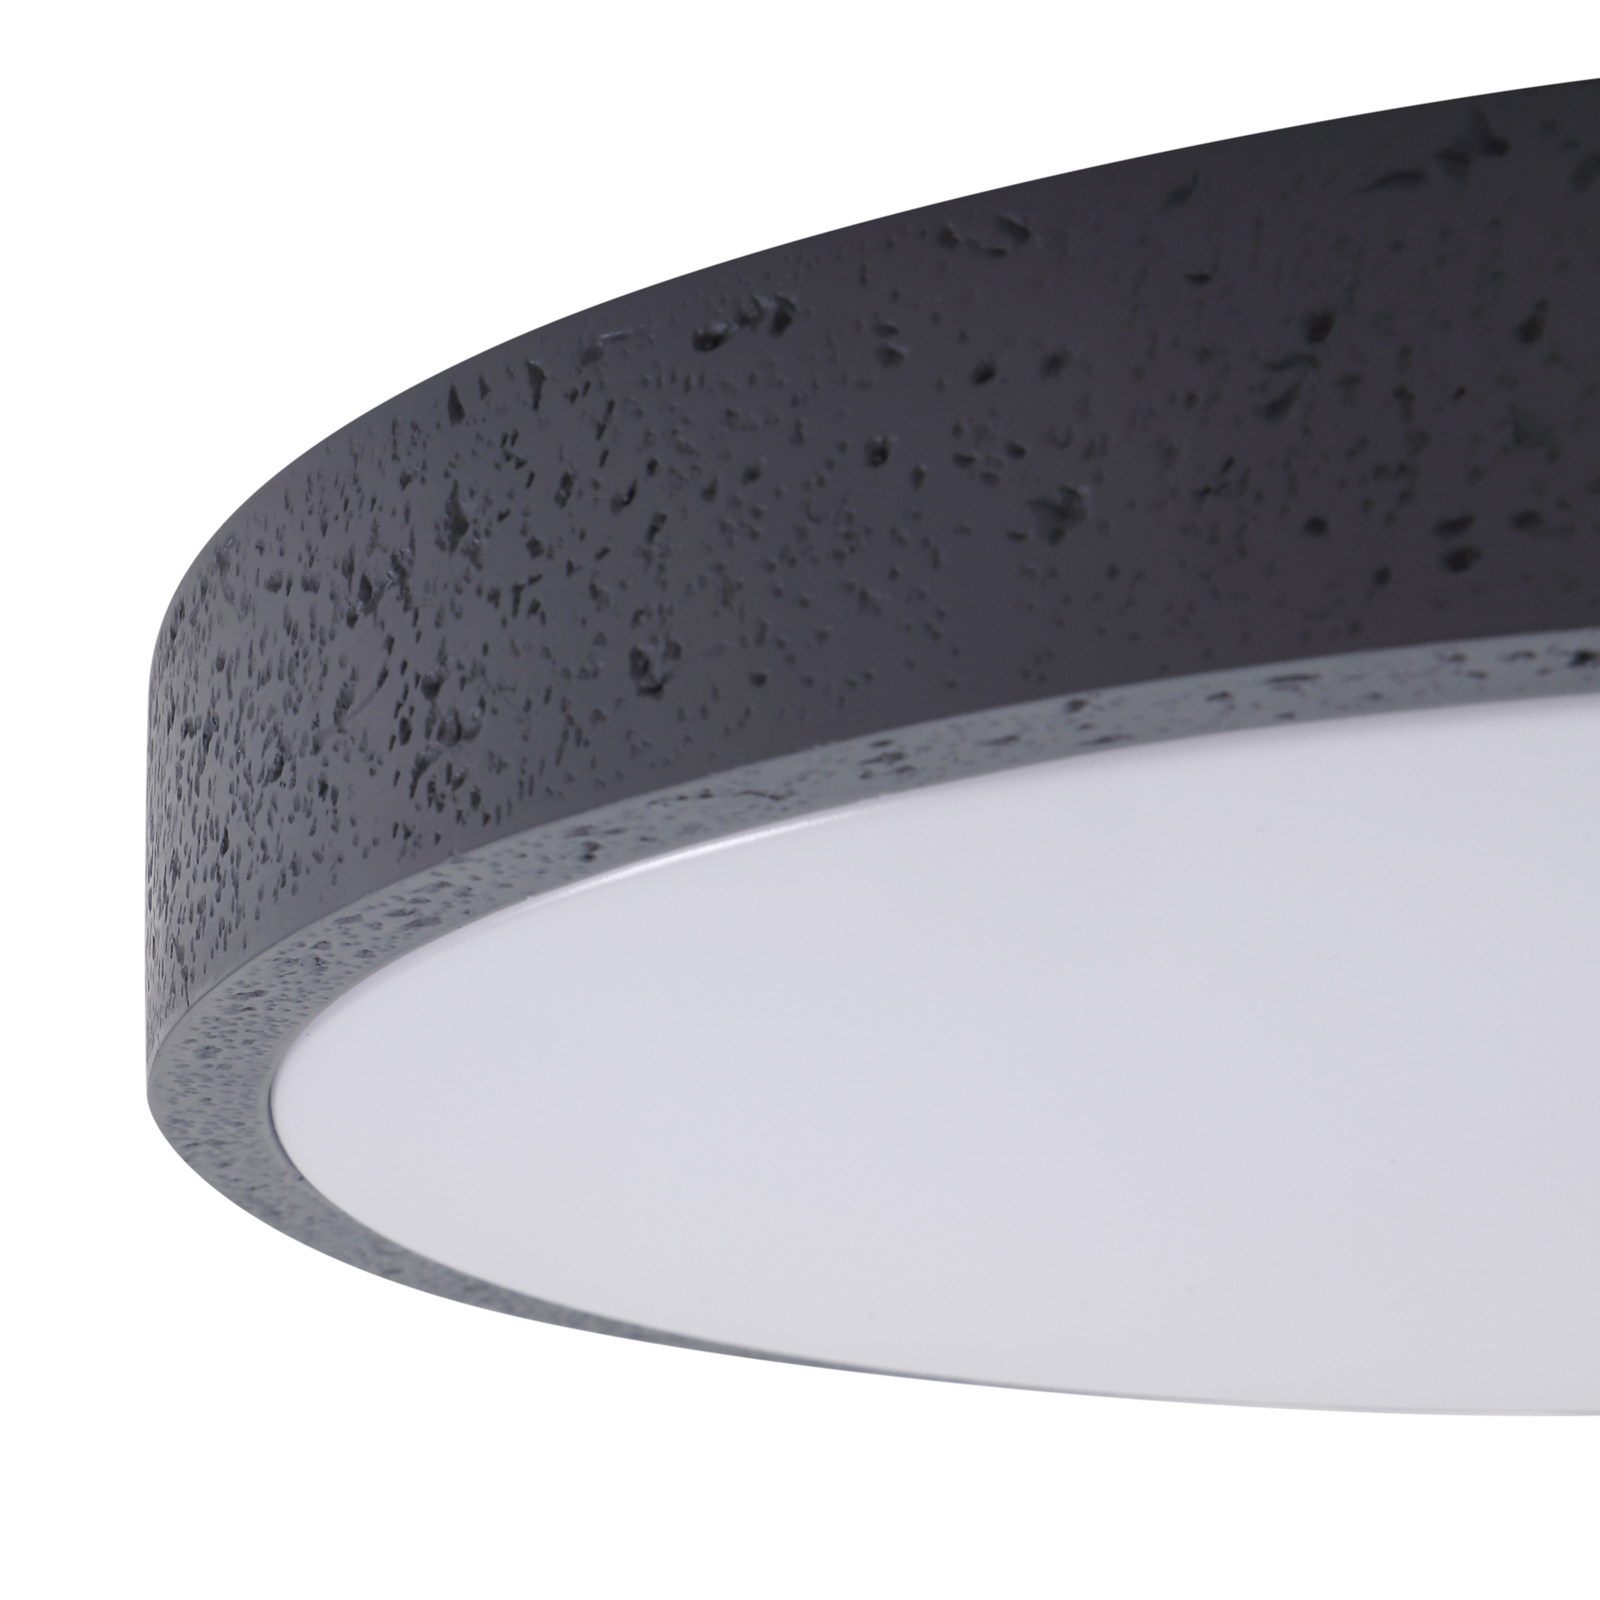 Lindby LED ceiling light Manala, concrete grey, RGB, CCT, remote control